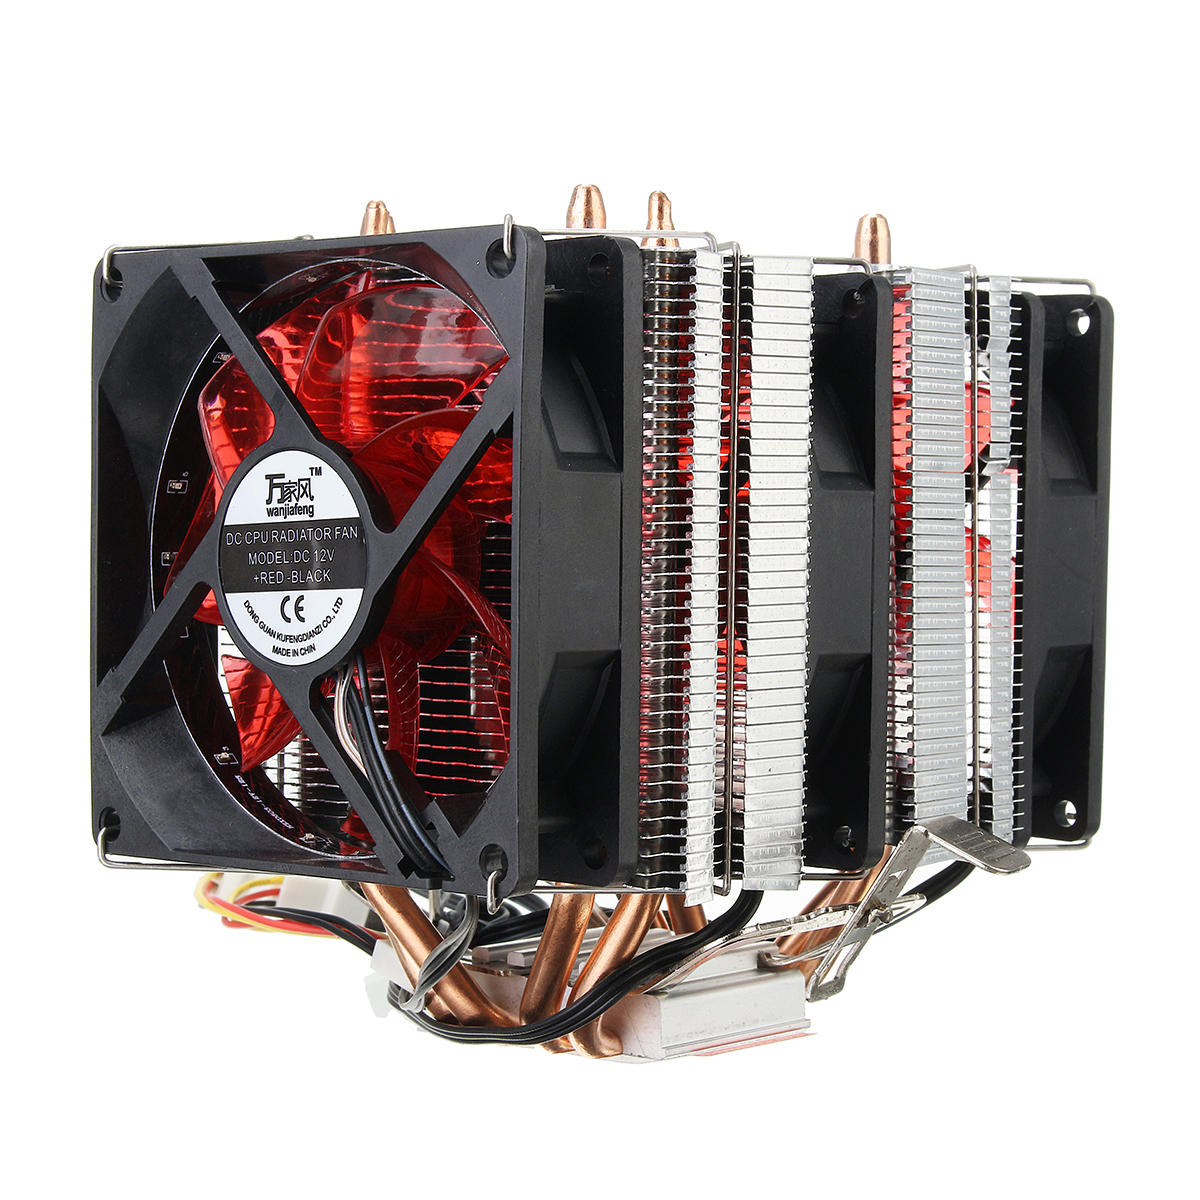 

4 Heat Pipes Red LED 3 Охлаждающий радиатор охладителя охлаждения процессора для AMD AM2 / 2 + AM3 Intel LGA 1156